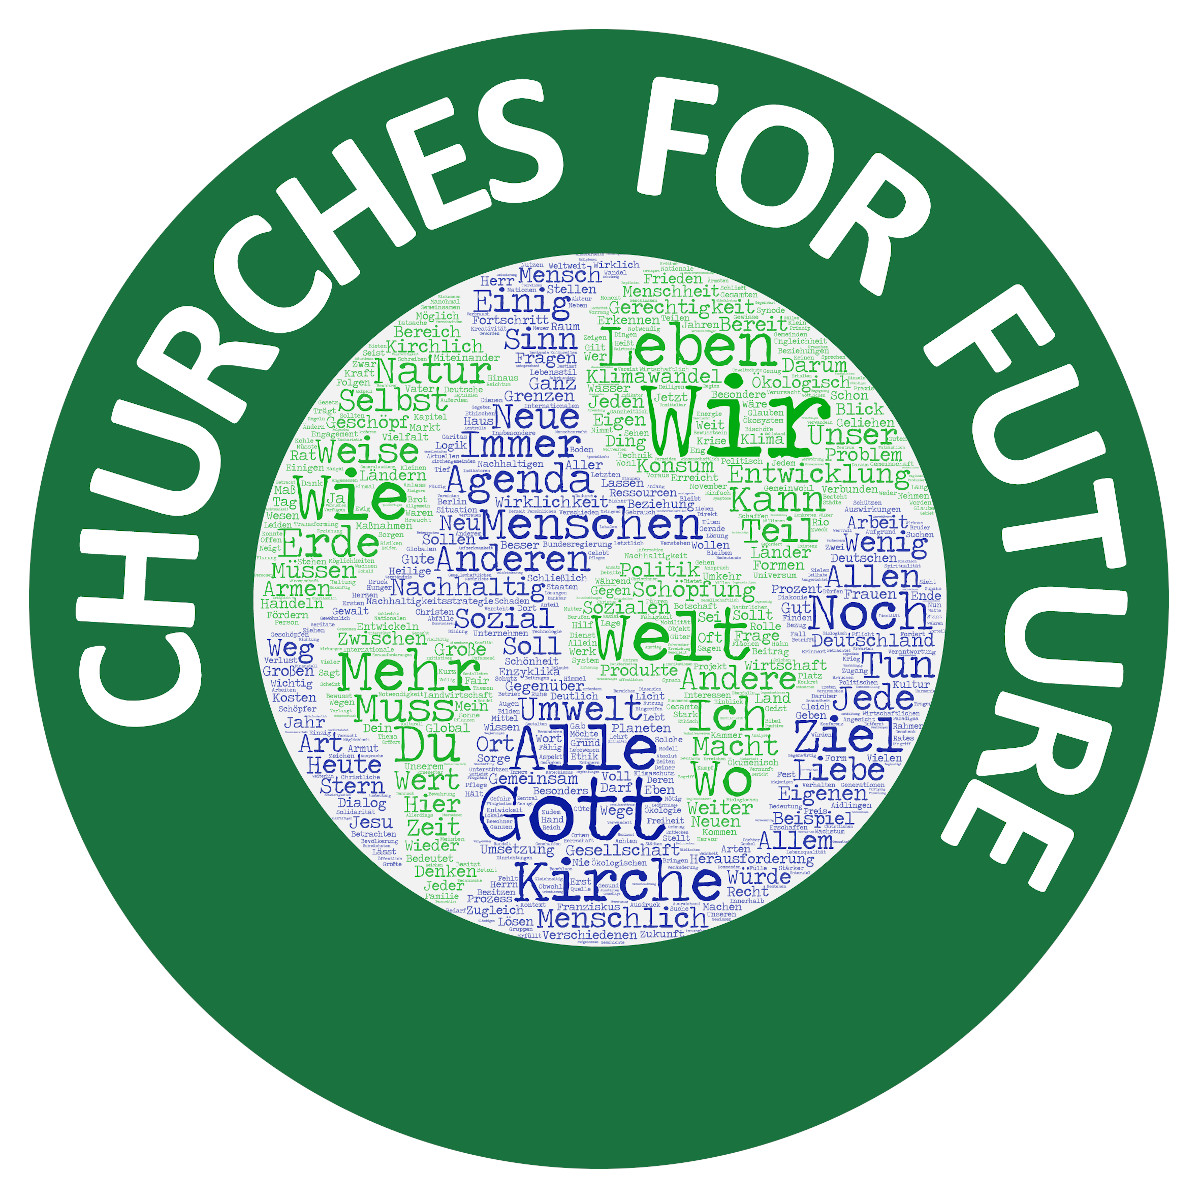 Churches For Future